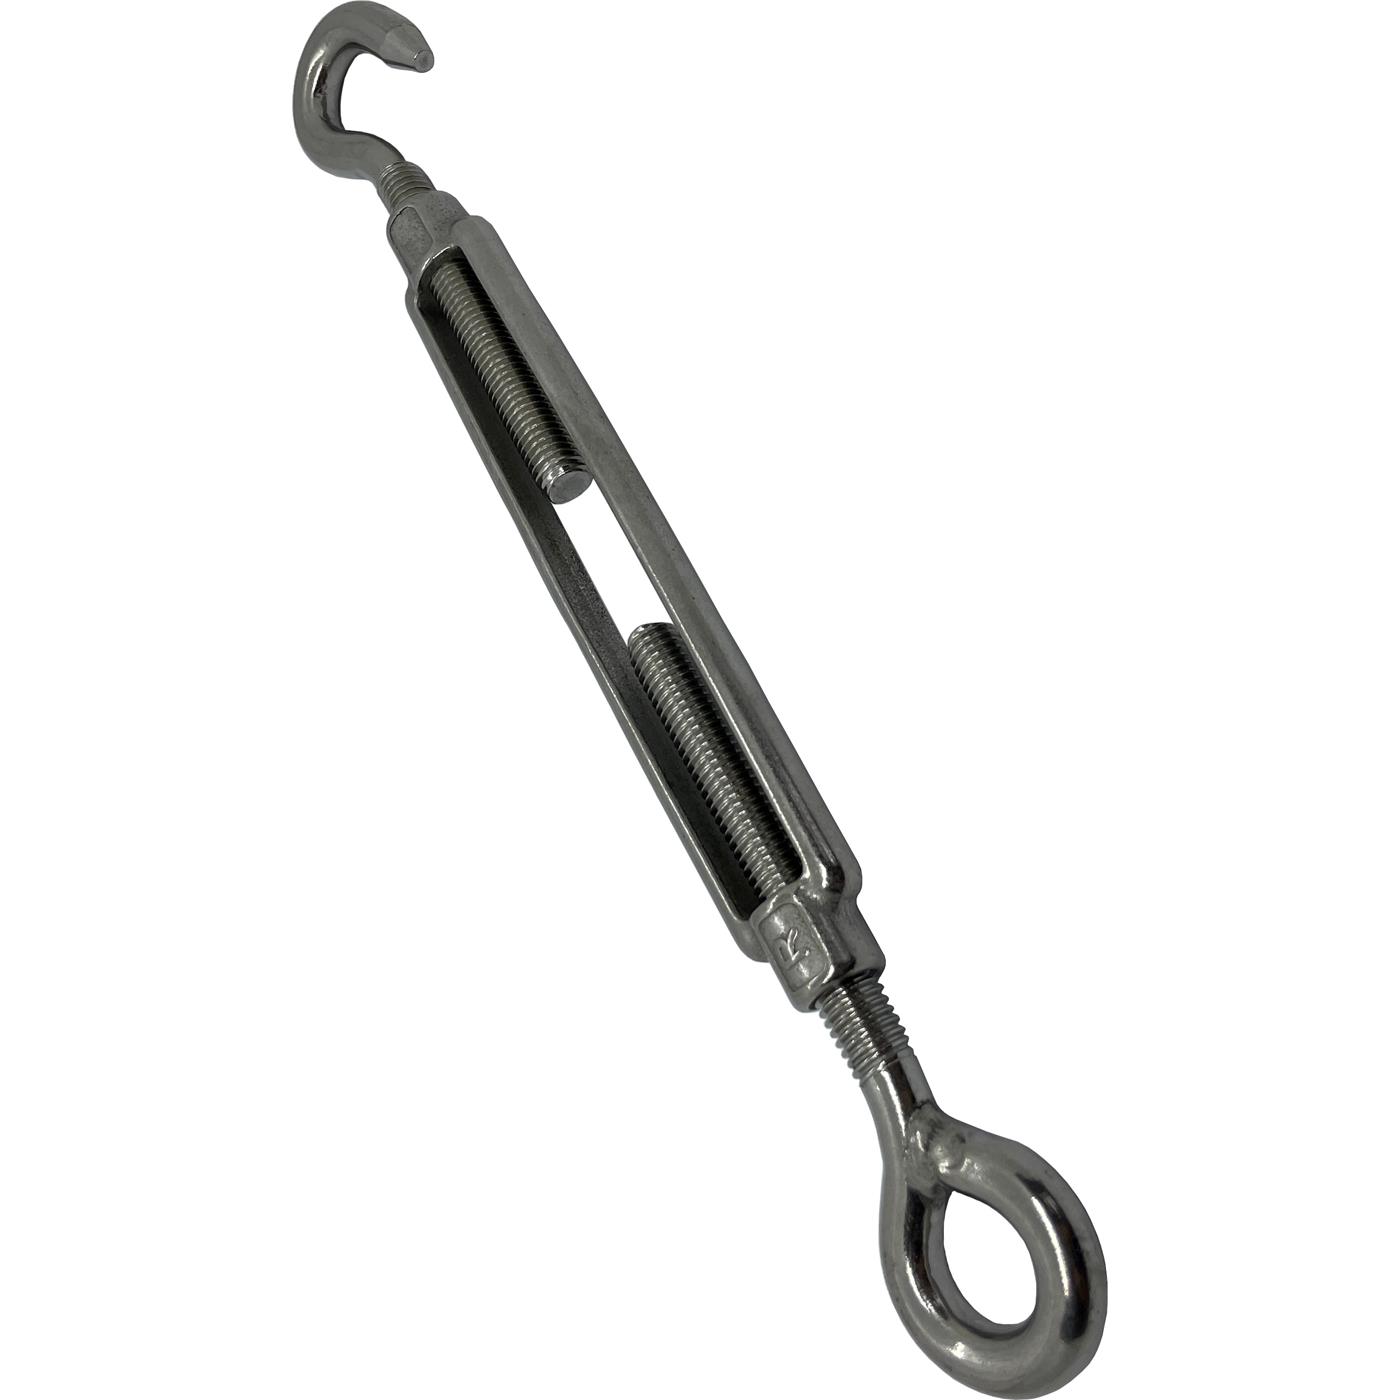 Rope tensioner Eyelet-Hook Stainless steel V2A 304 M5 Turnbuckle Shroud clamp